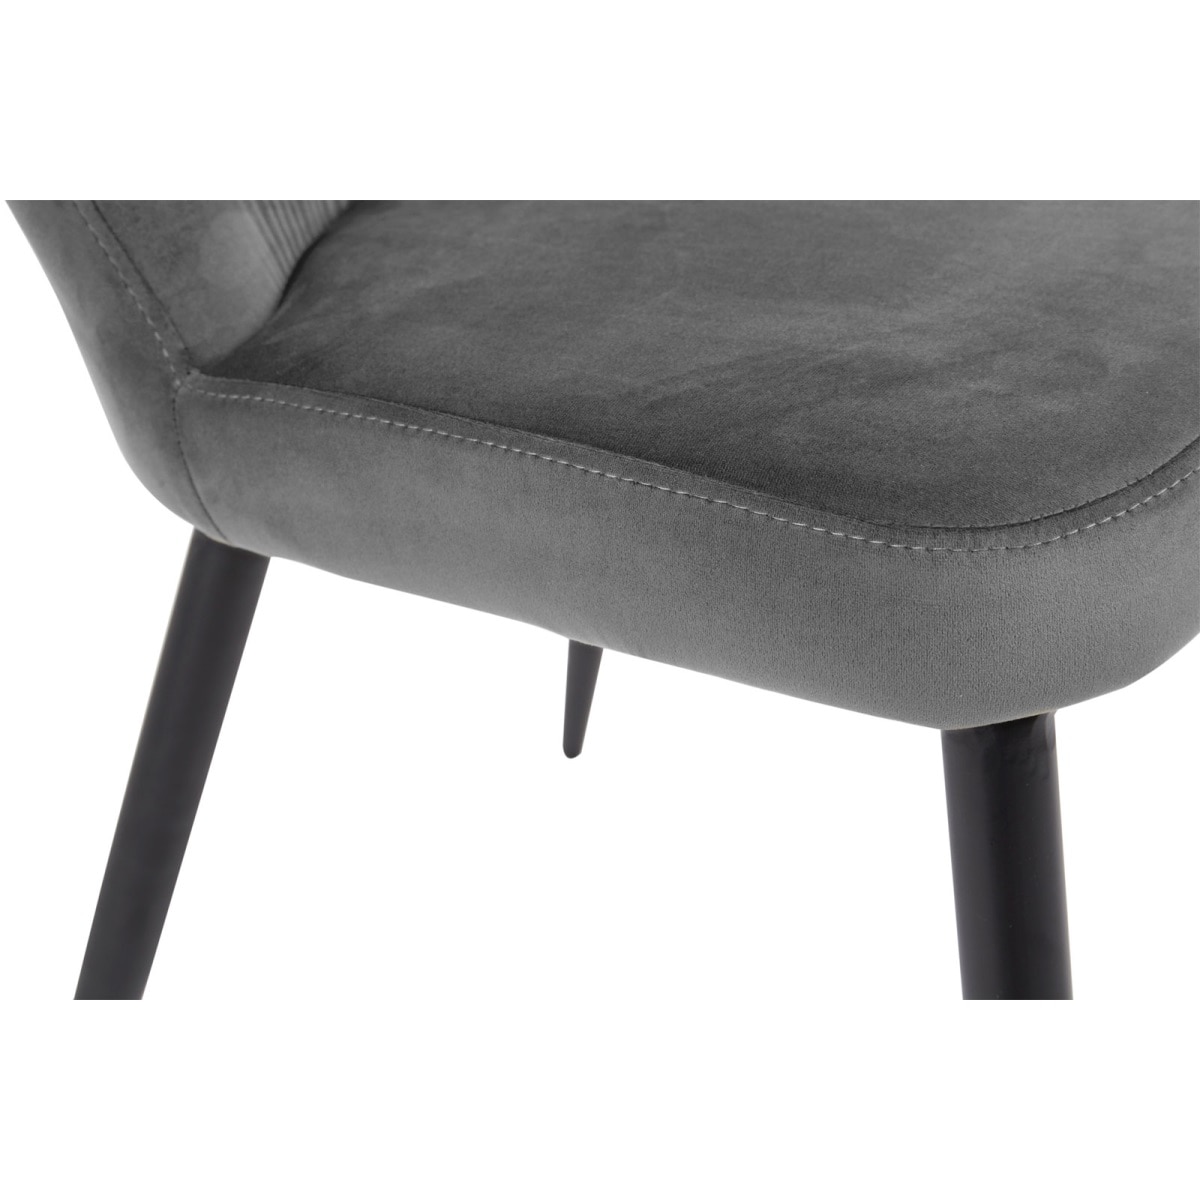 | Samtstoff anthrazit/Gestell Boss matt Aguas lackiert Stuhl Möbel schwarz